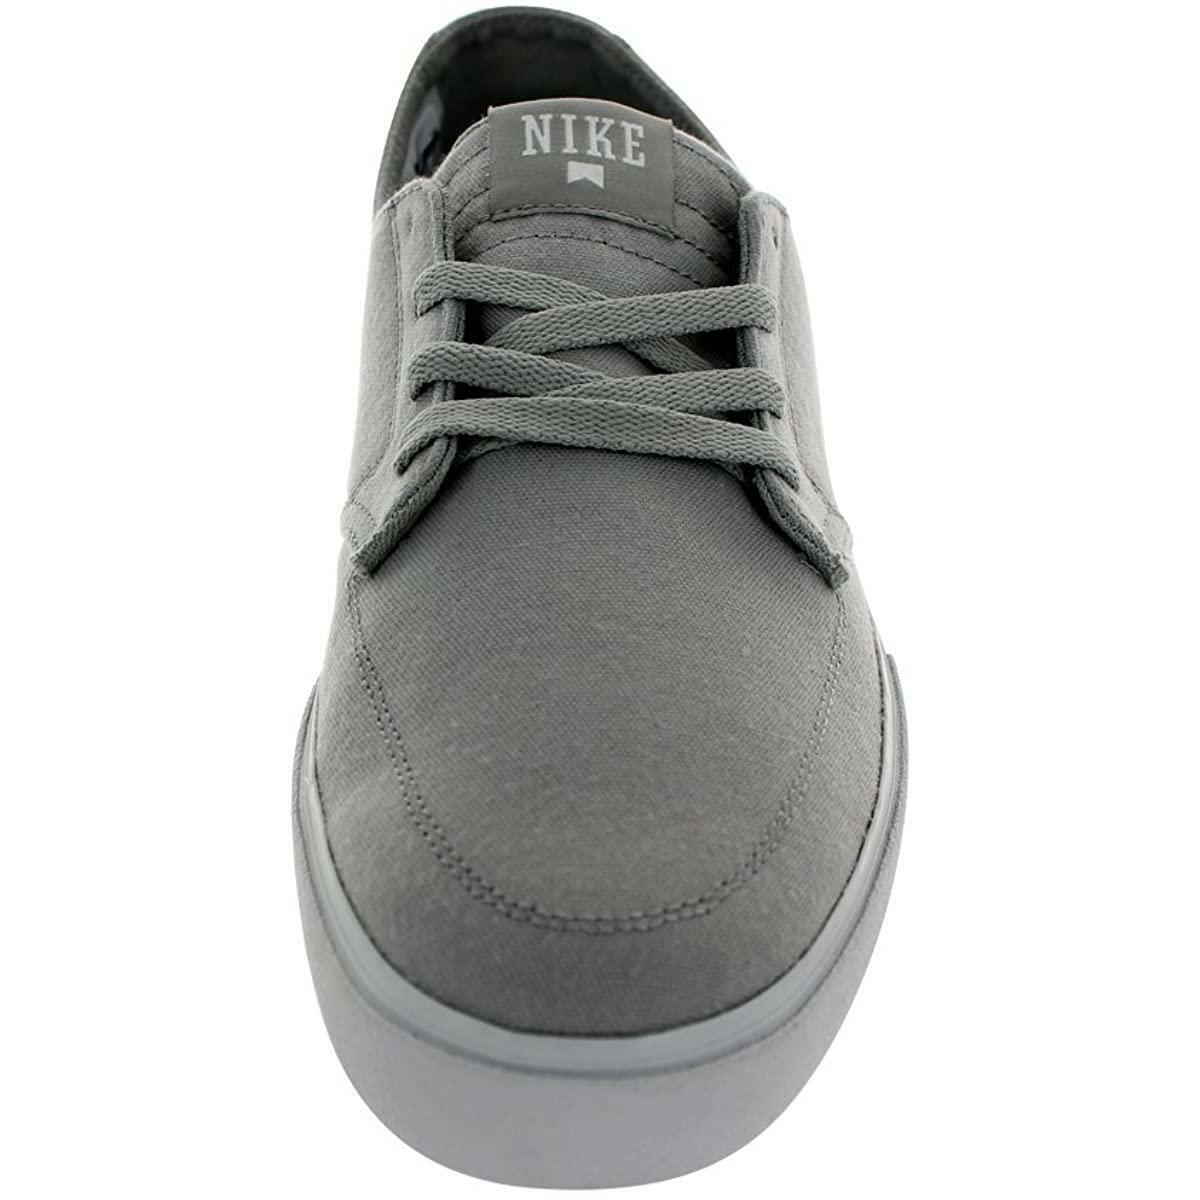 Nike shoes Braata Canvas - Gray 1